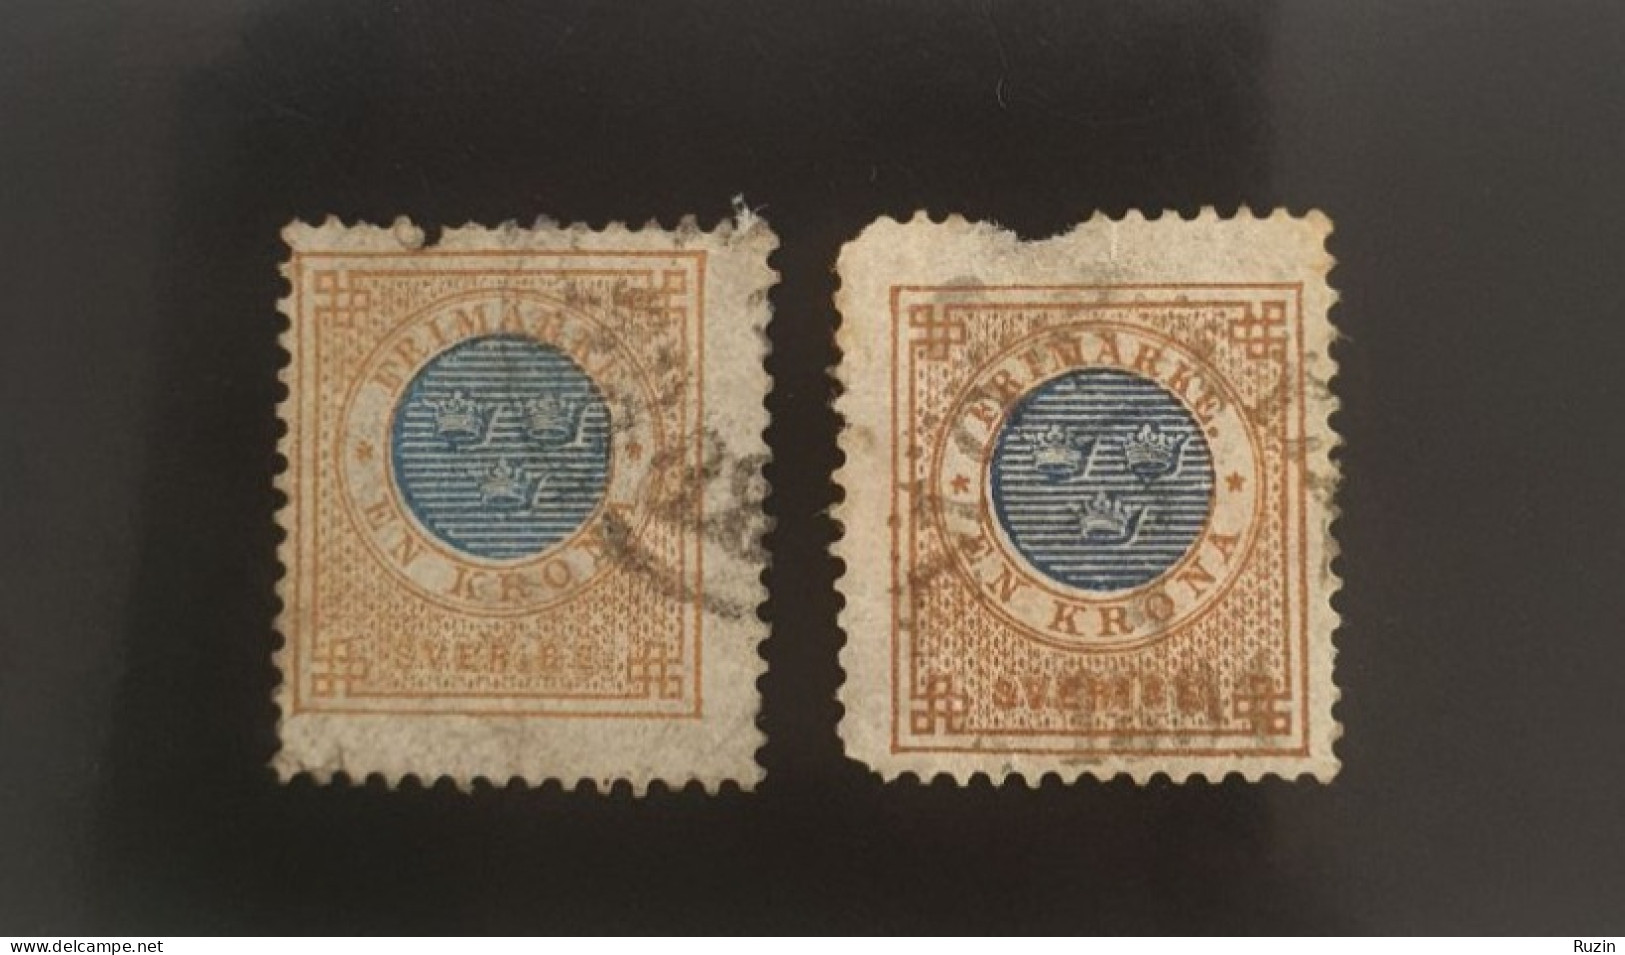 Sweden Stamps - Circle Type 1 Kr - Usados